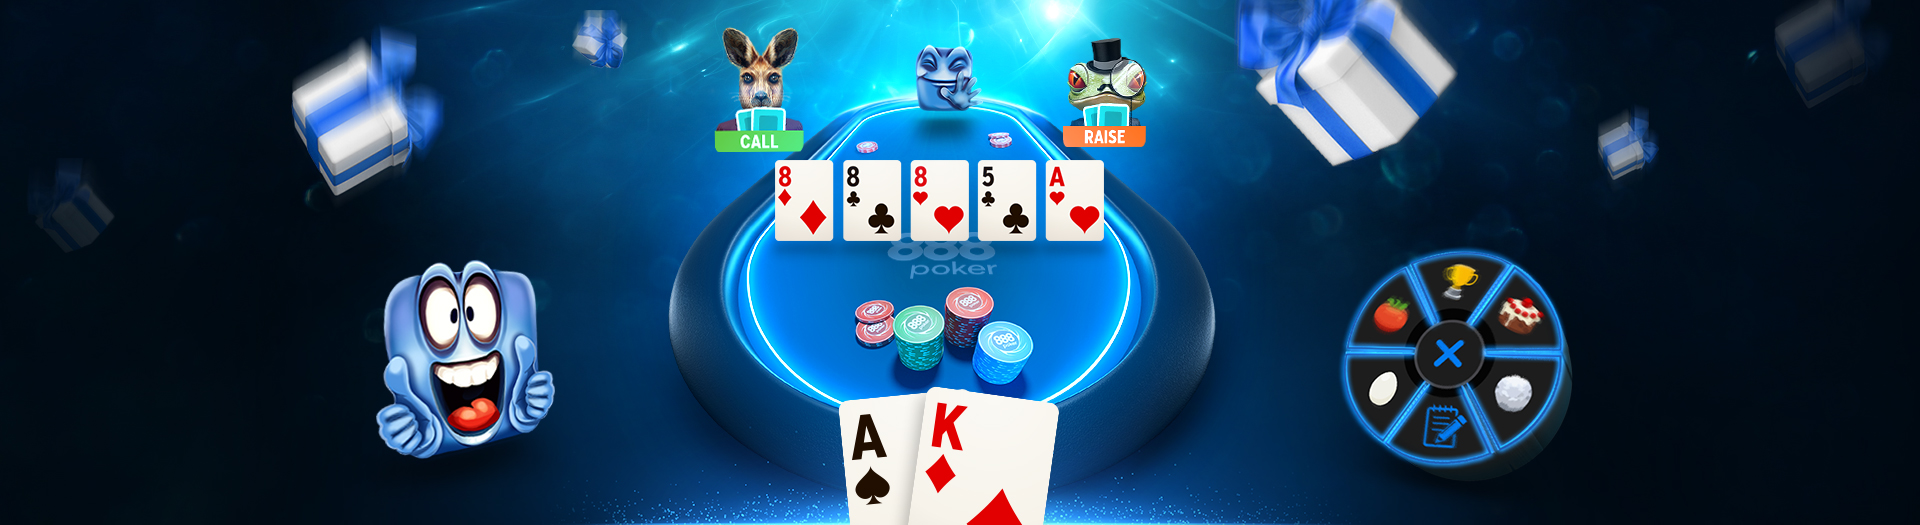 TS-43644-Poker-8-Launch-LP-image-1601453084510_tcm1918-498519